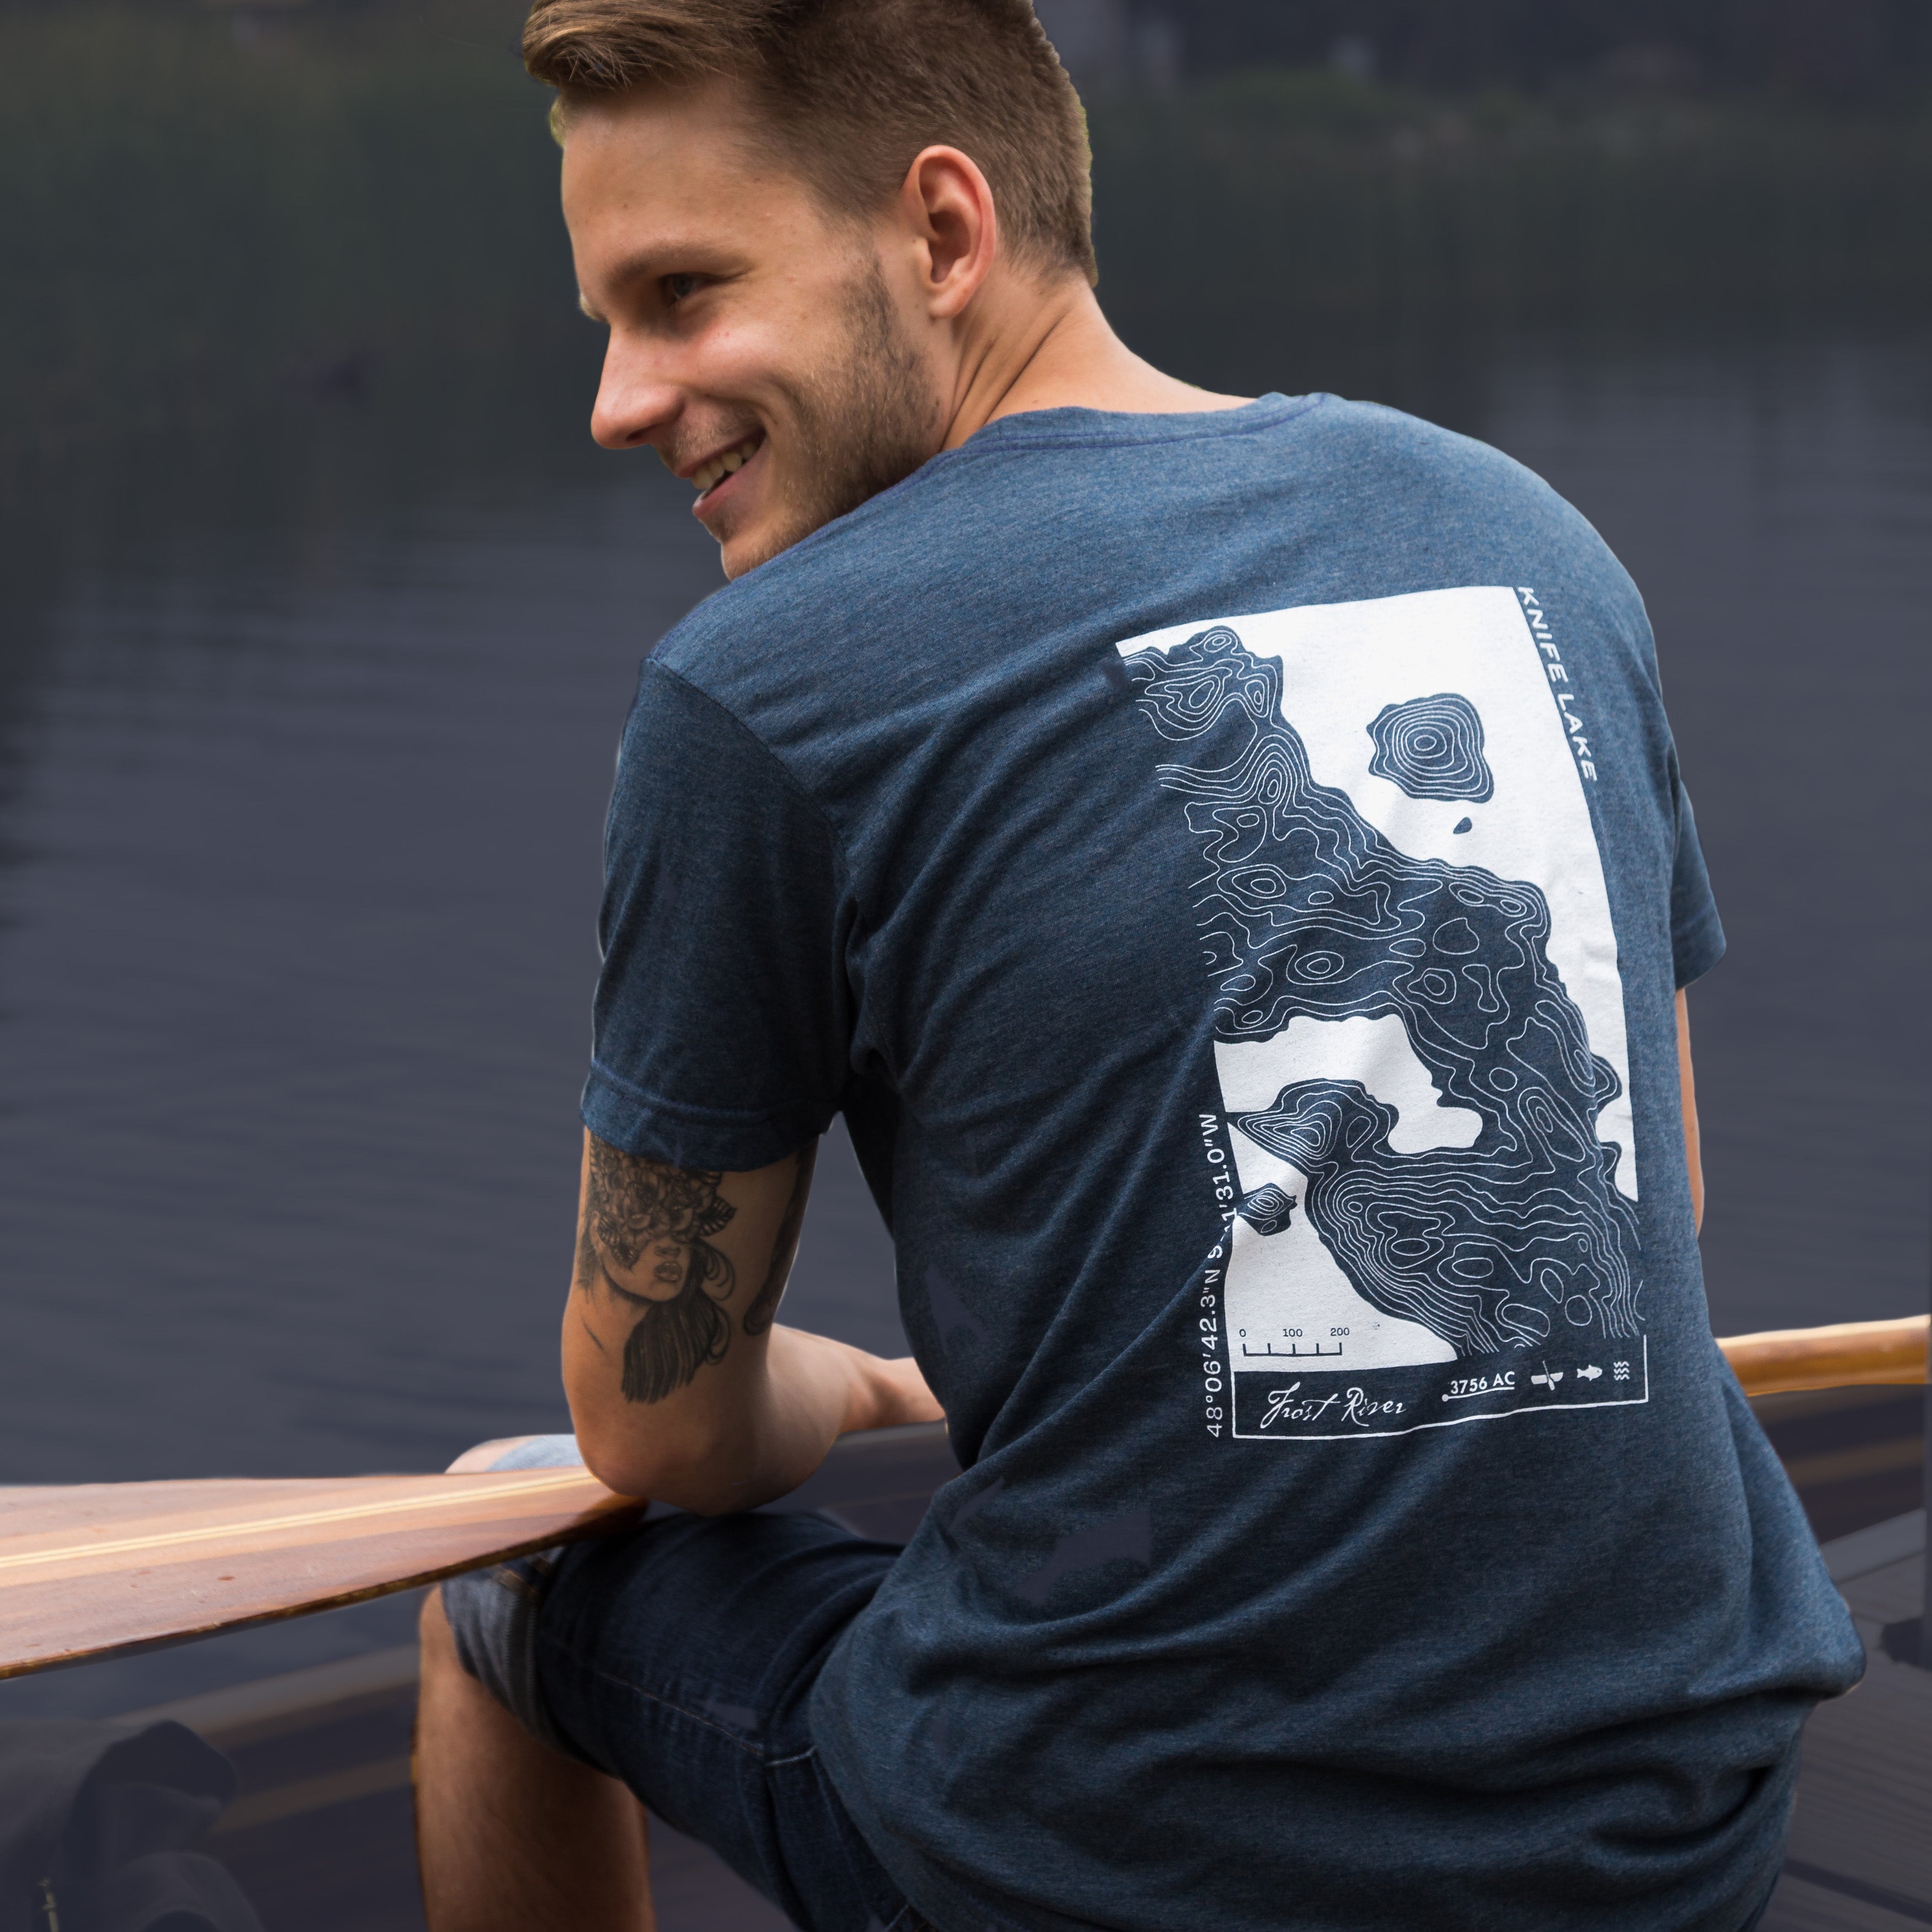 Guy sitting on dock holding canoe paddle wearing a graphic T-shirt.